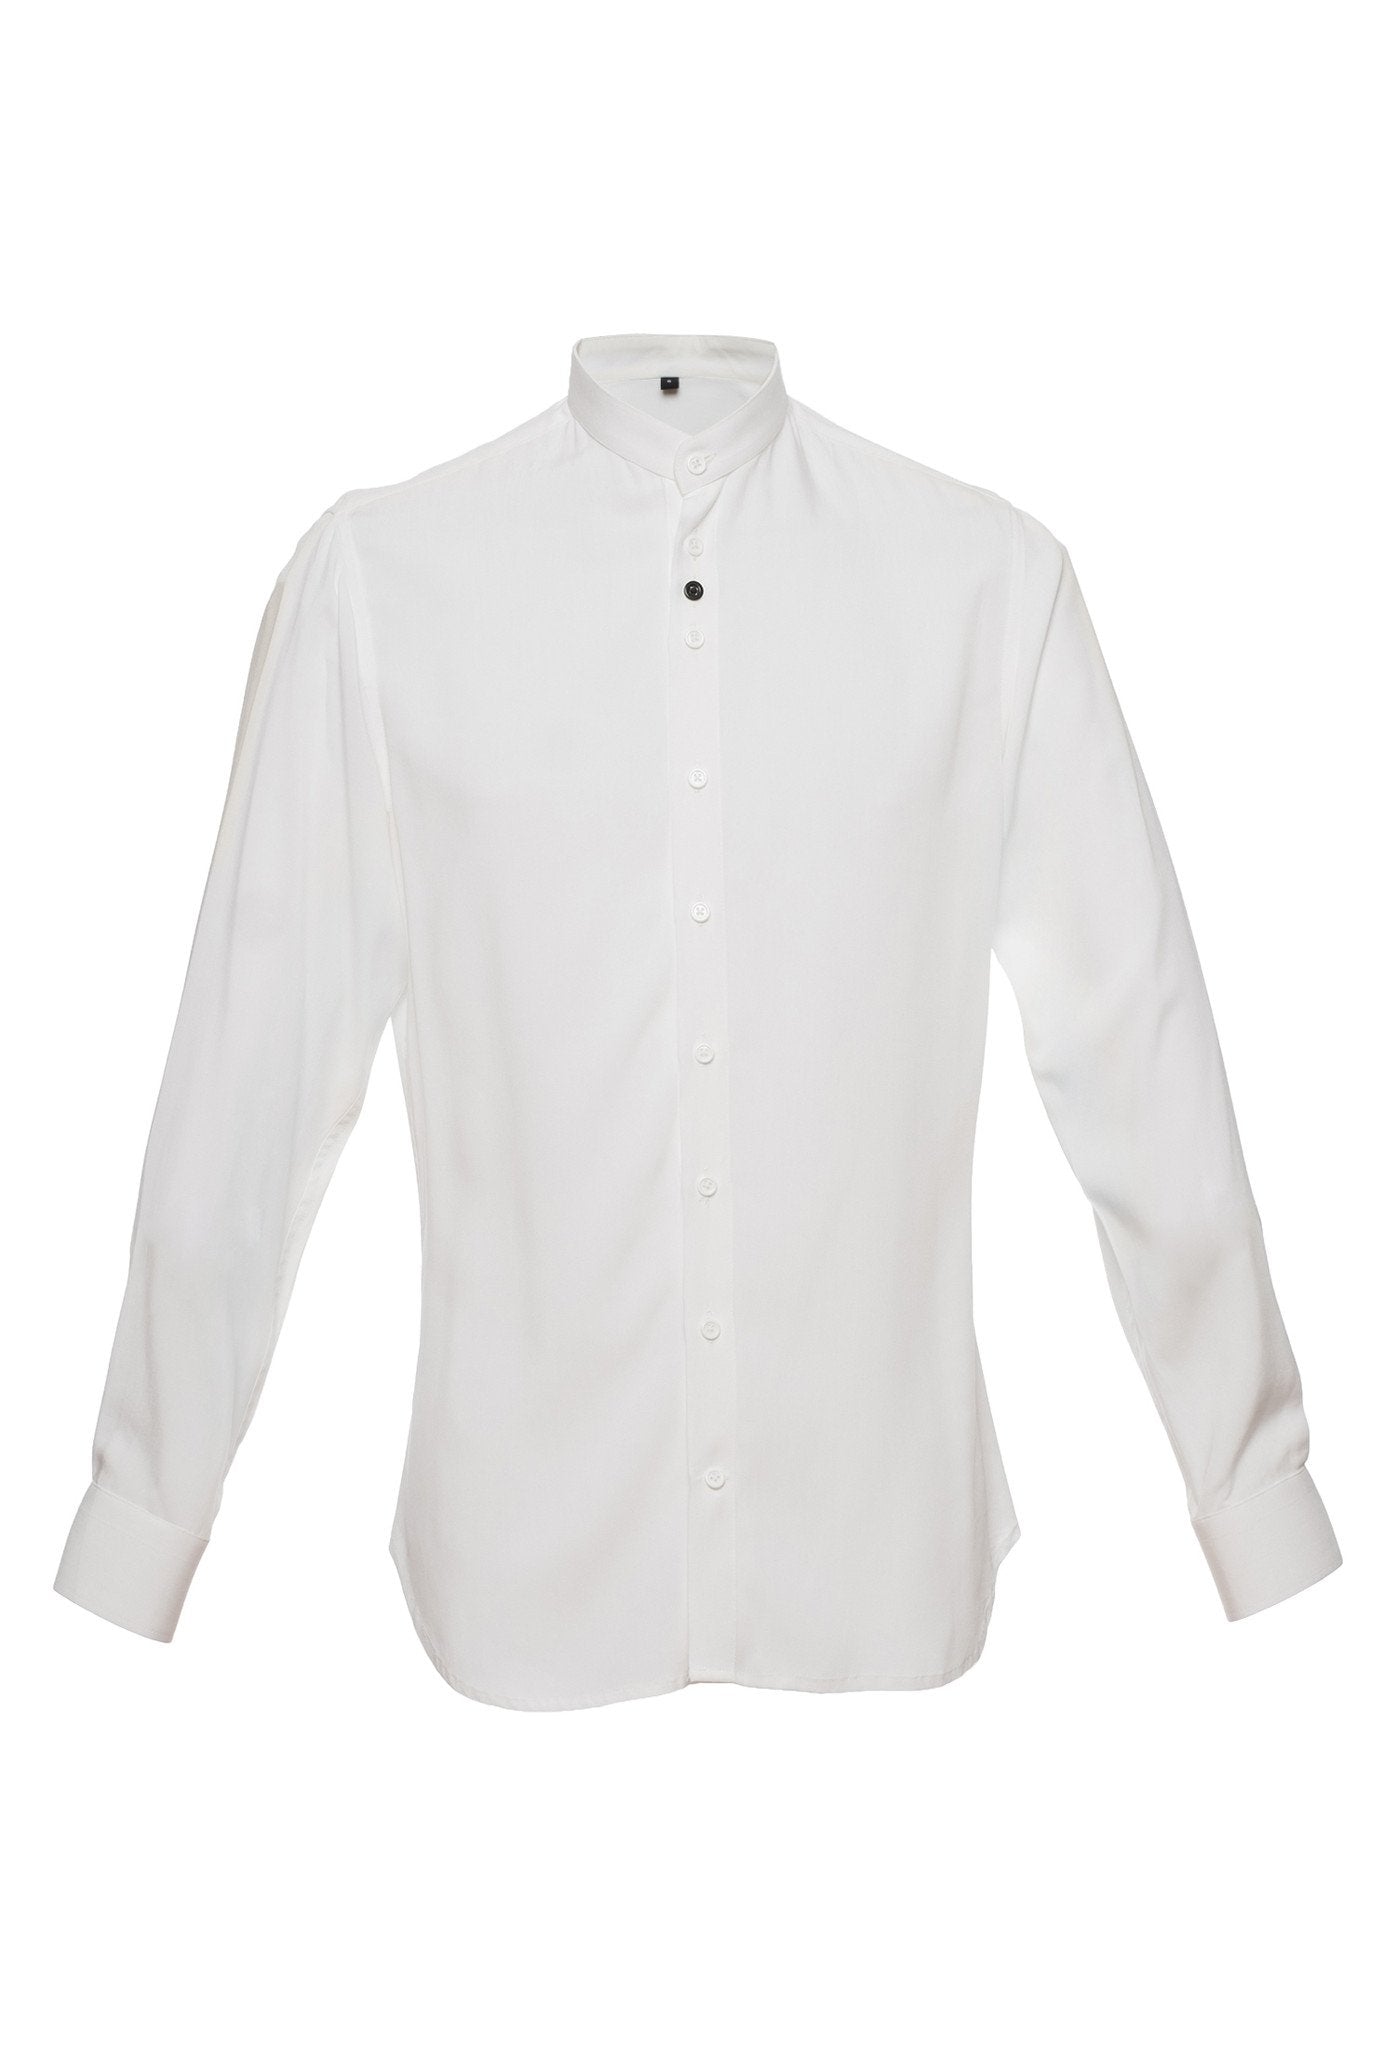 TheG viscose handmade designer classic long shirt white